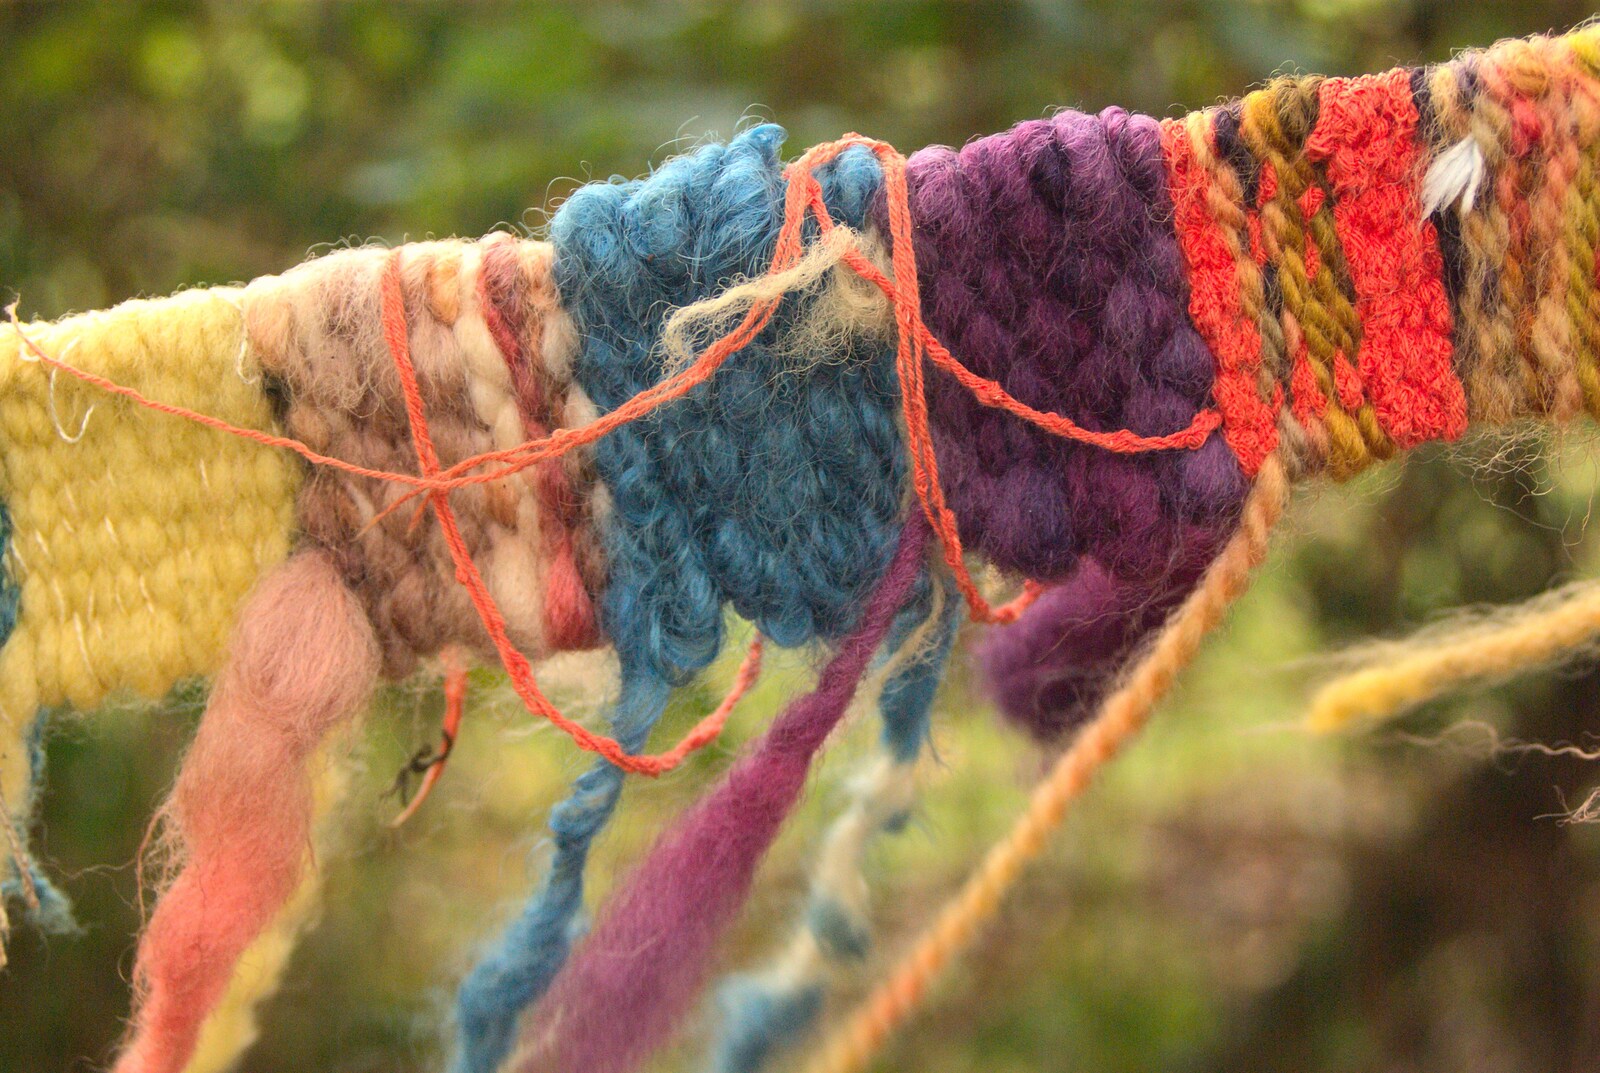 Colourful random knitwear hanging on a line from Autumn in Thornham Estate, Thornham, Suffolk - 6th November 2011